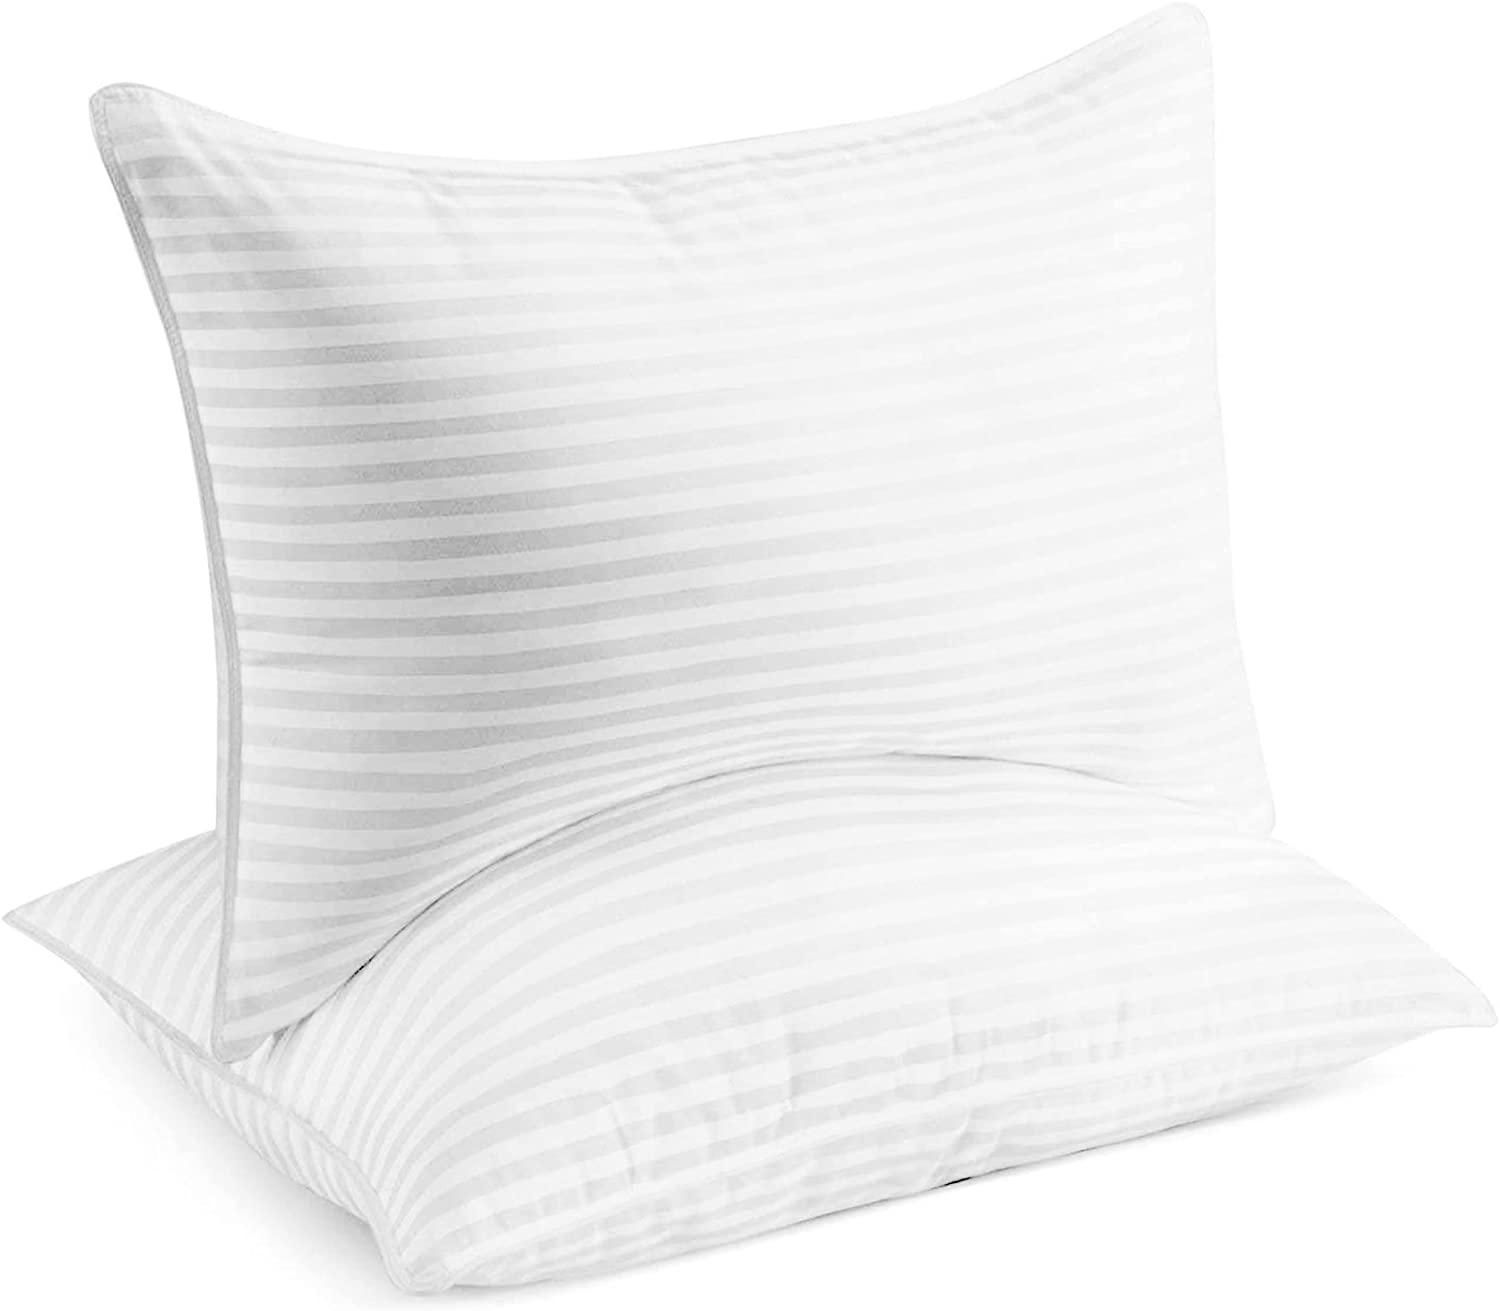 Beckham Hotel Collection Bed Pillows, Queen set of 2 = $25.80